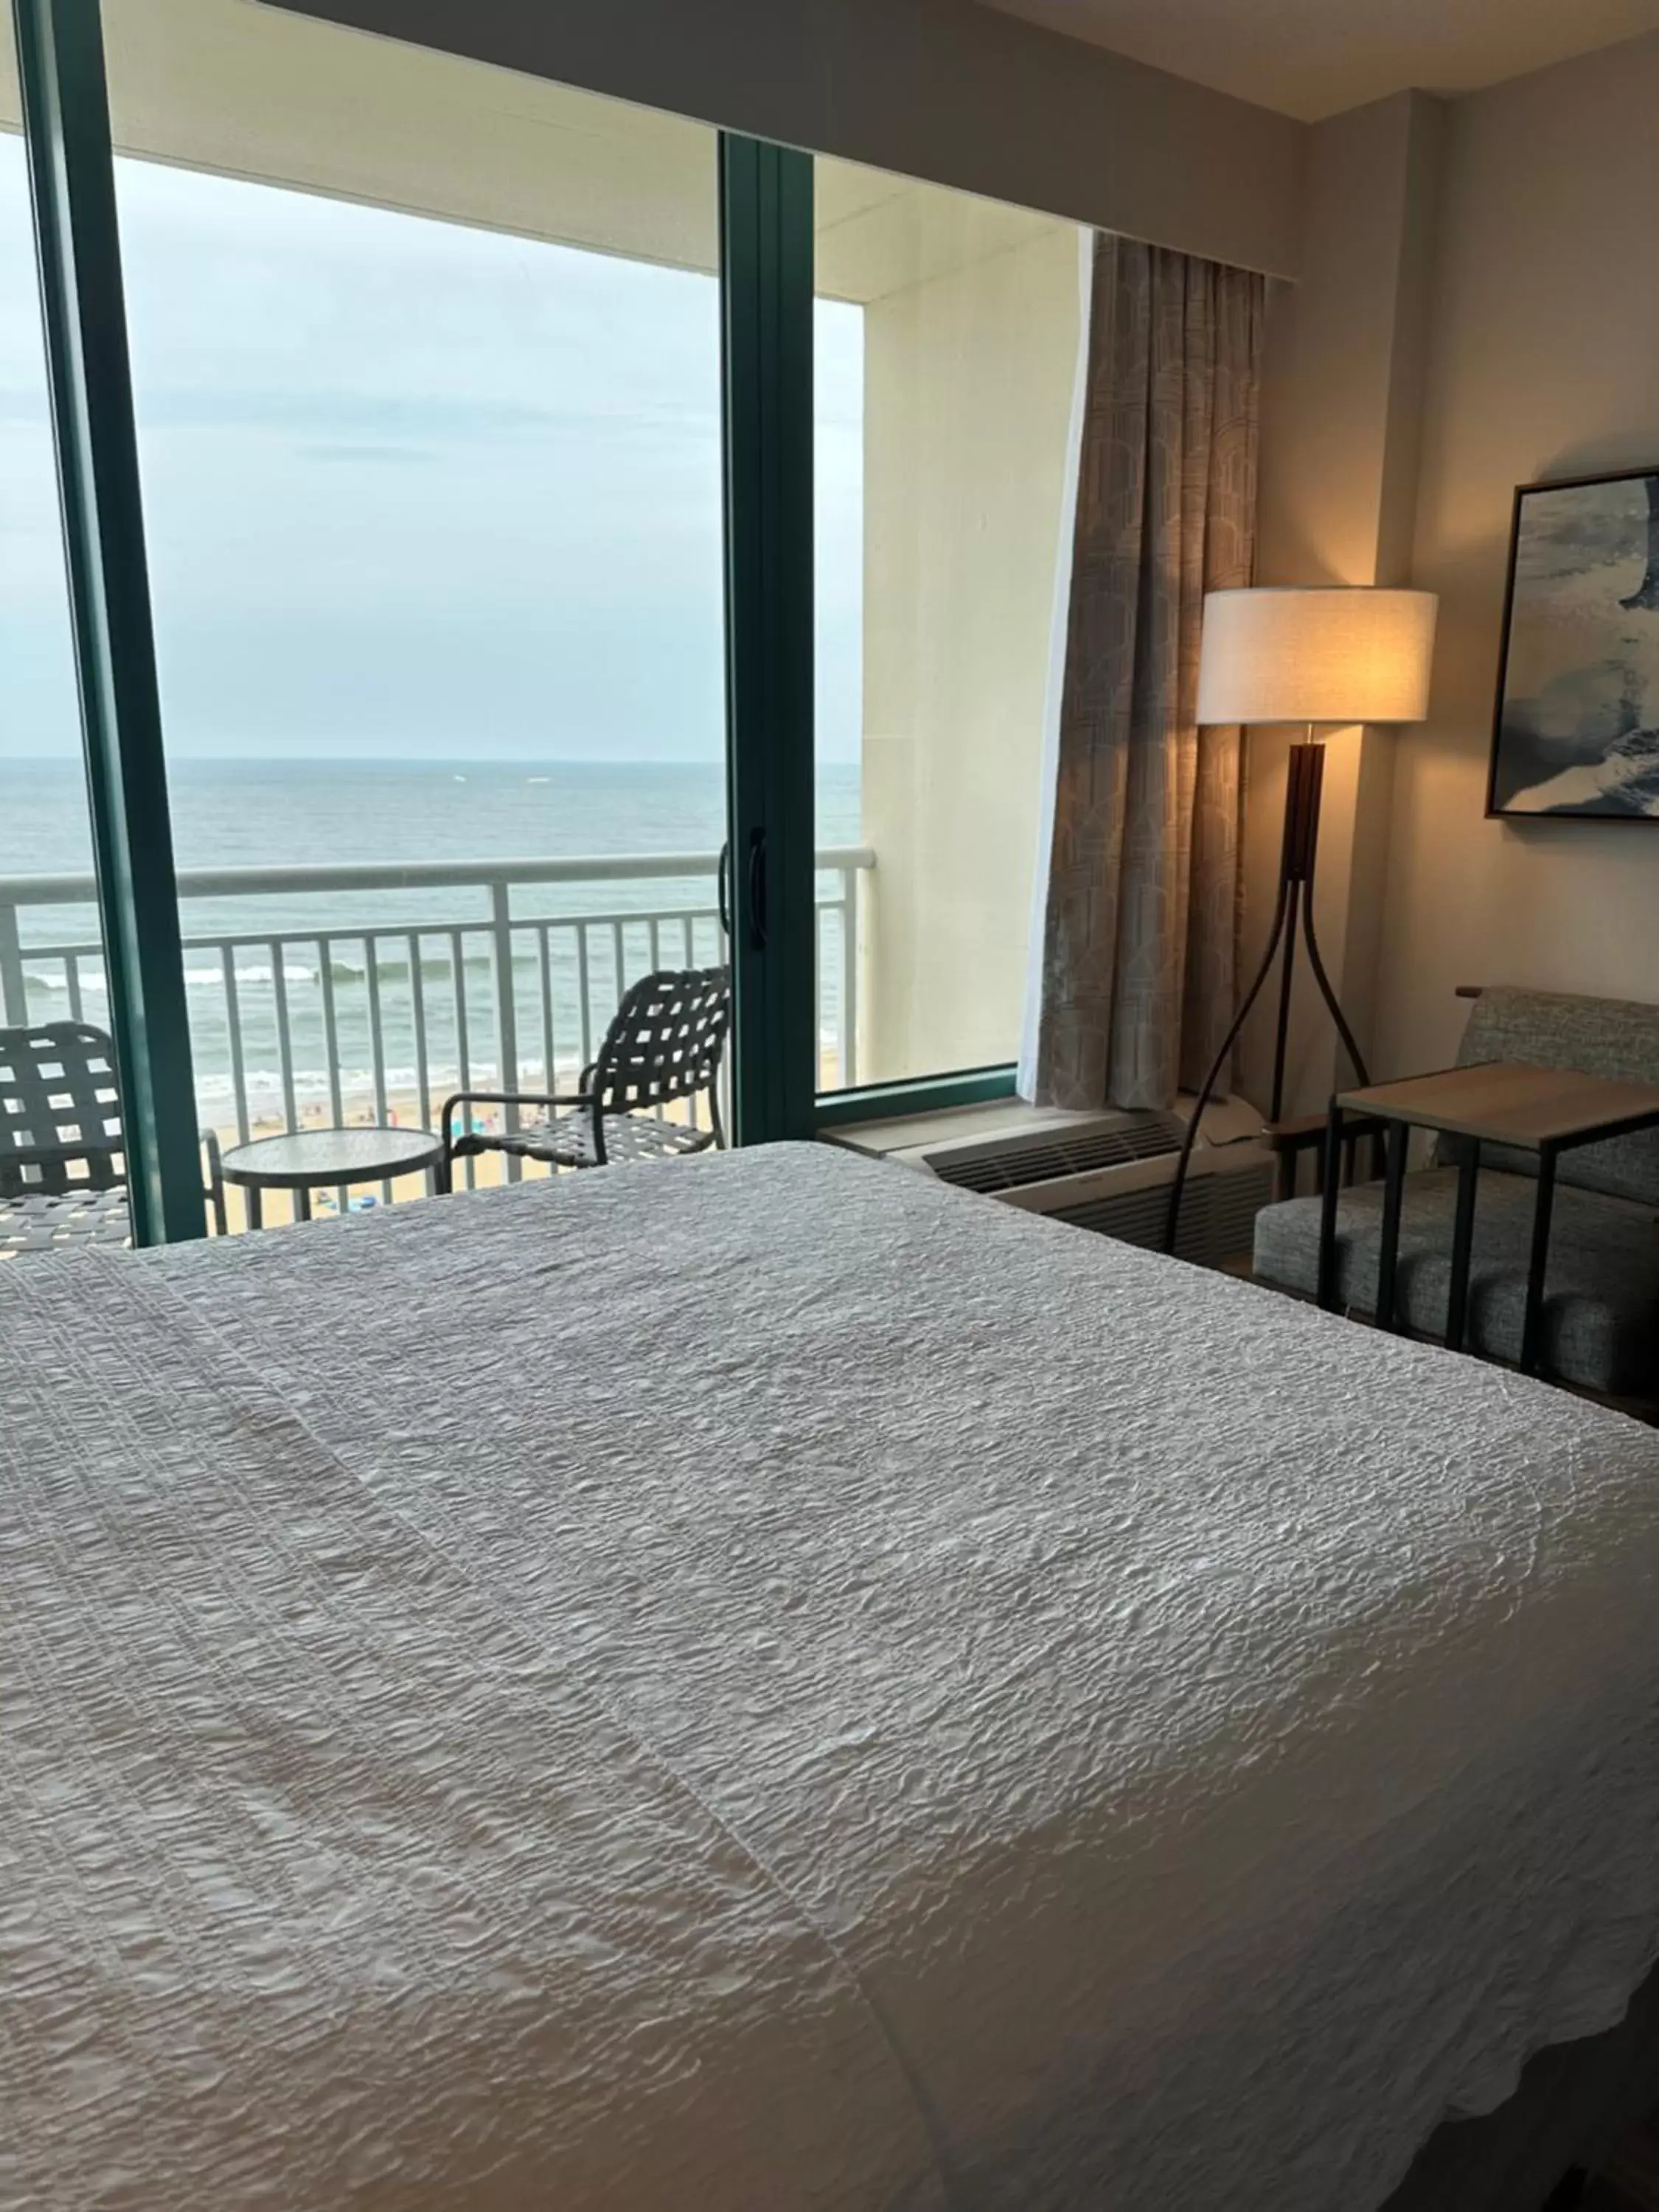 Bed in Hampton Inn Virginia Beach-Oceanfront South